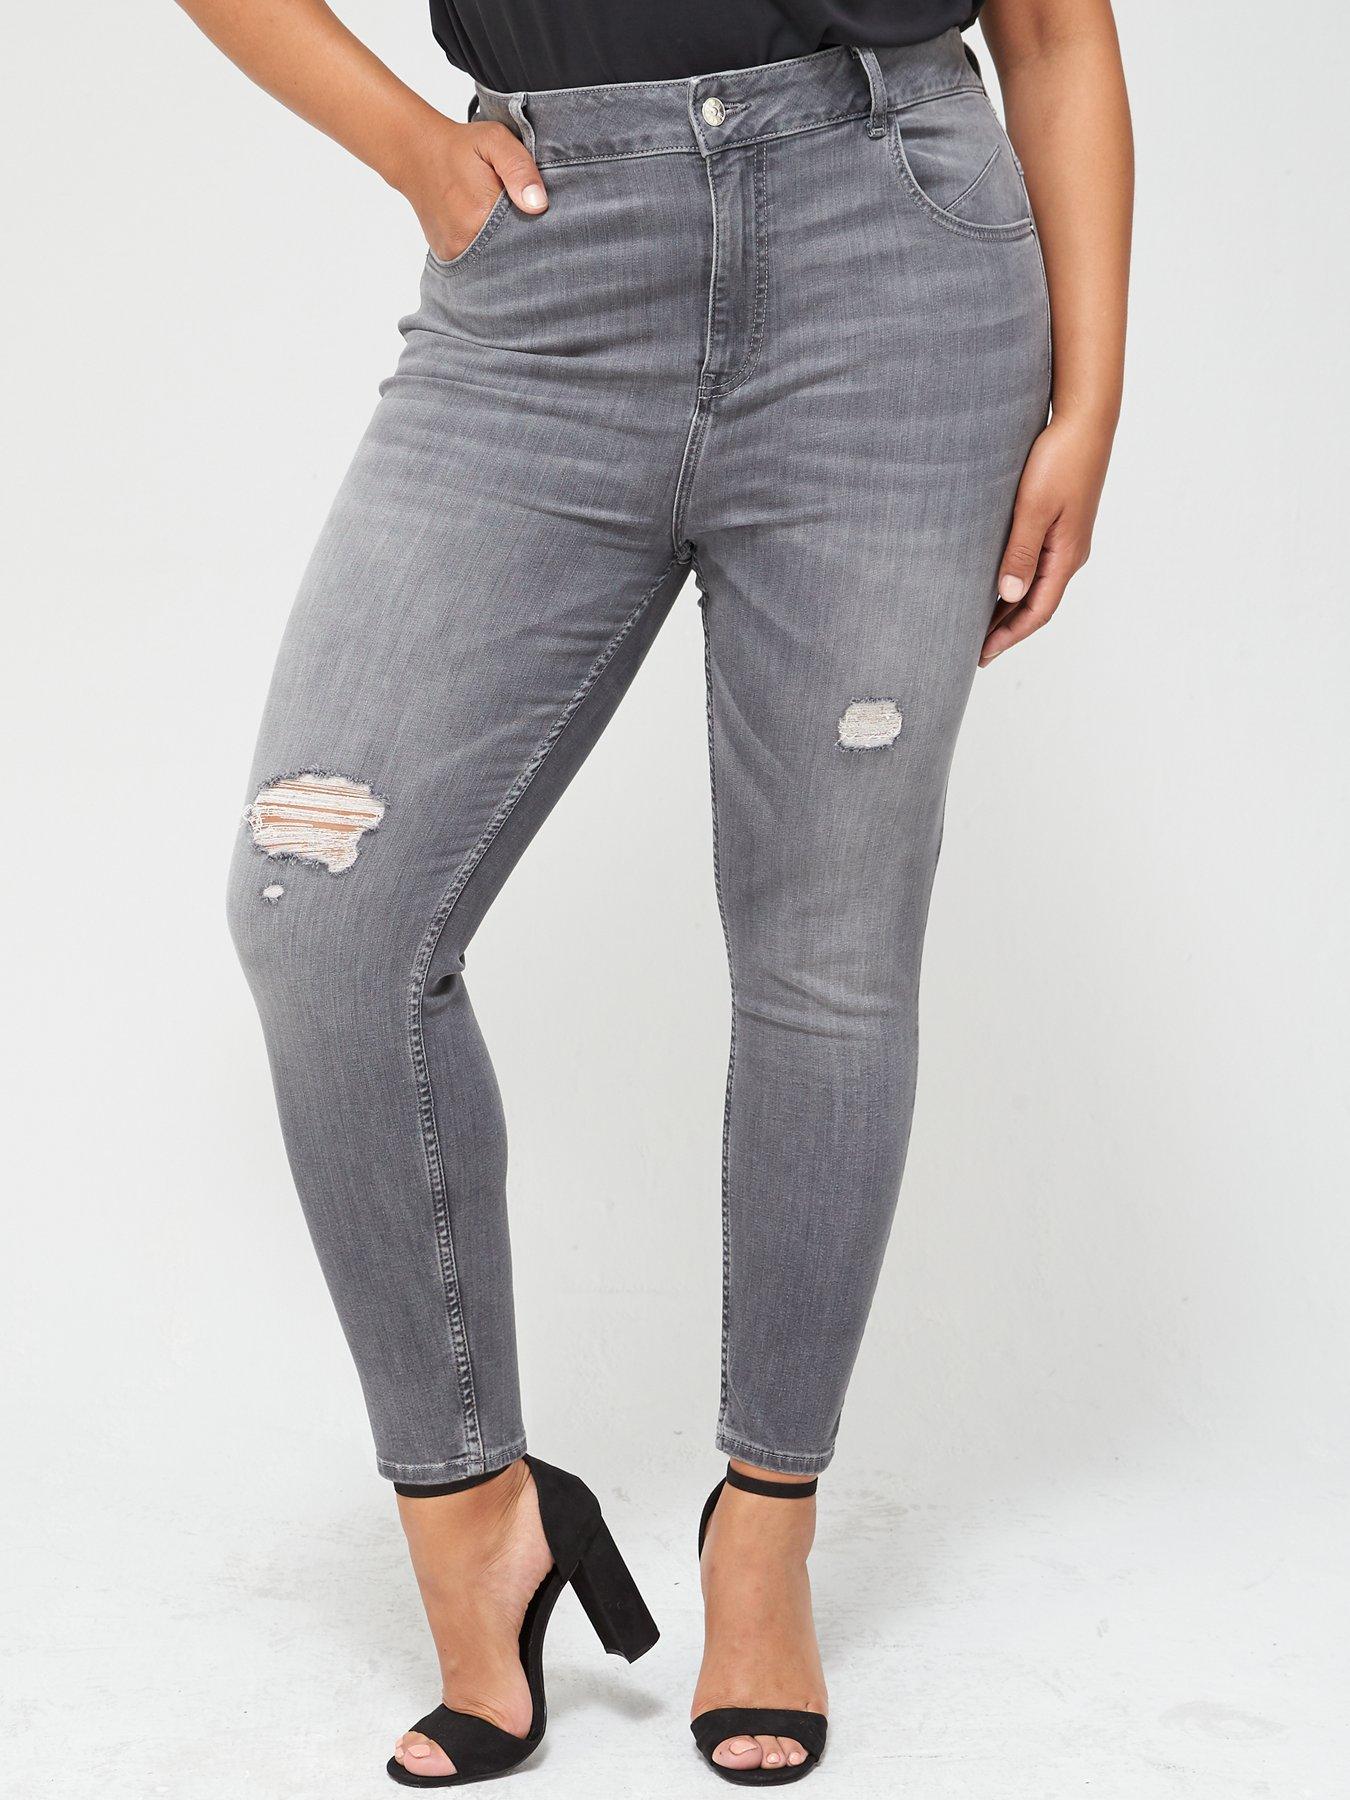 grey jeans womens uk